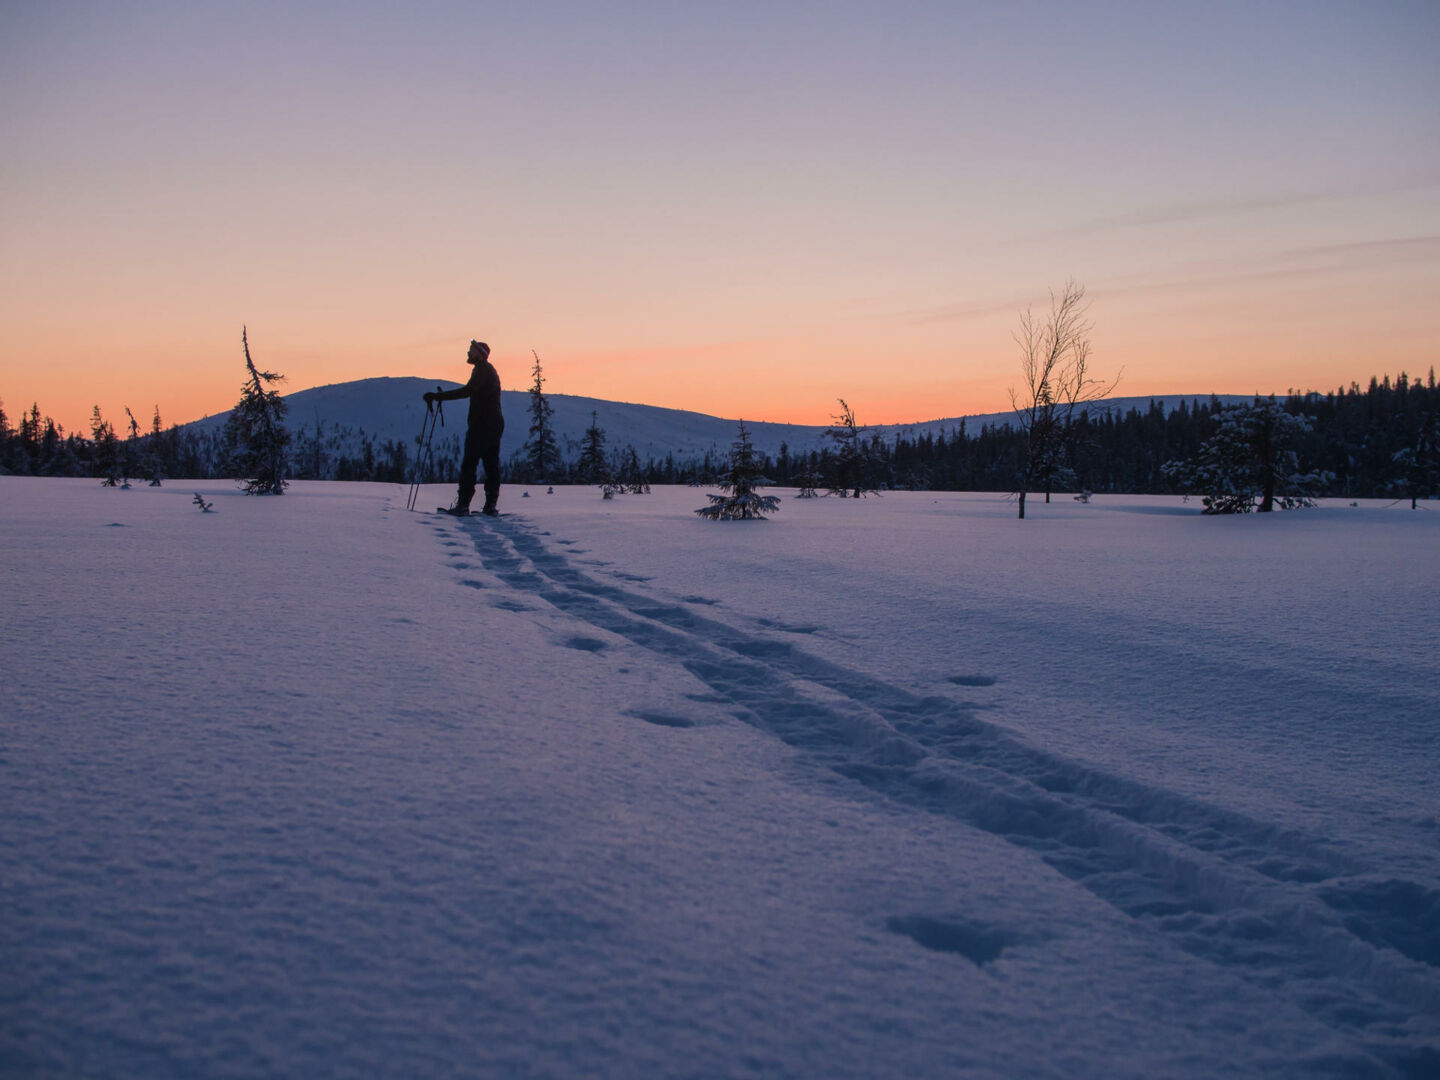 Polar night, one of the unique Arctic light conditions found in Finnish Lapland